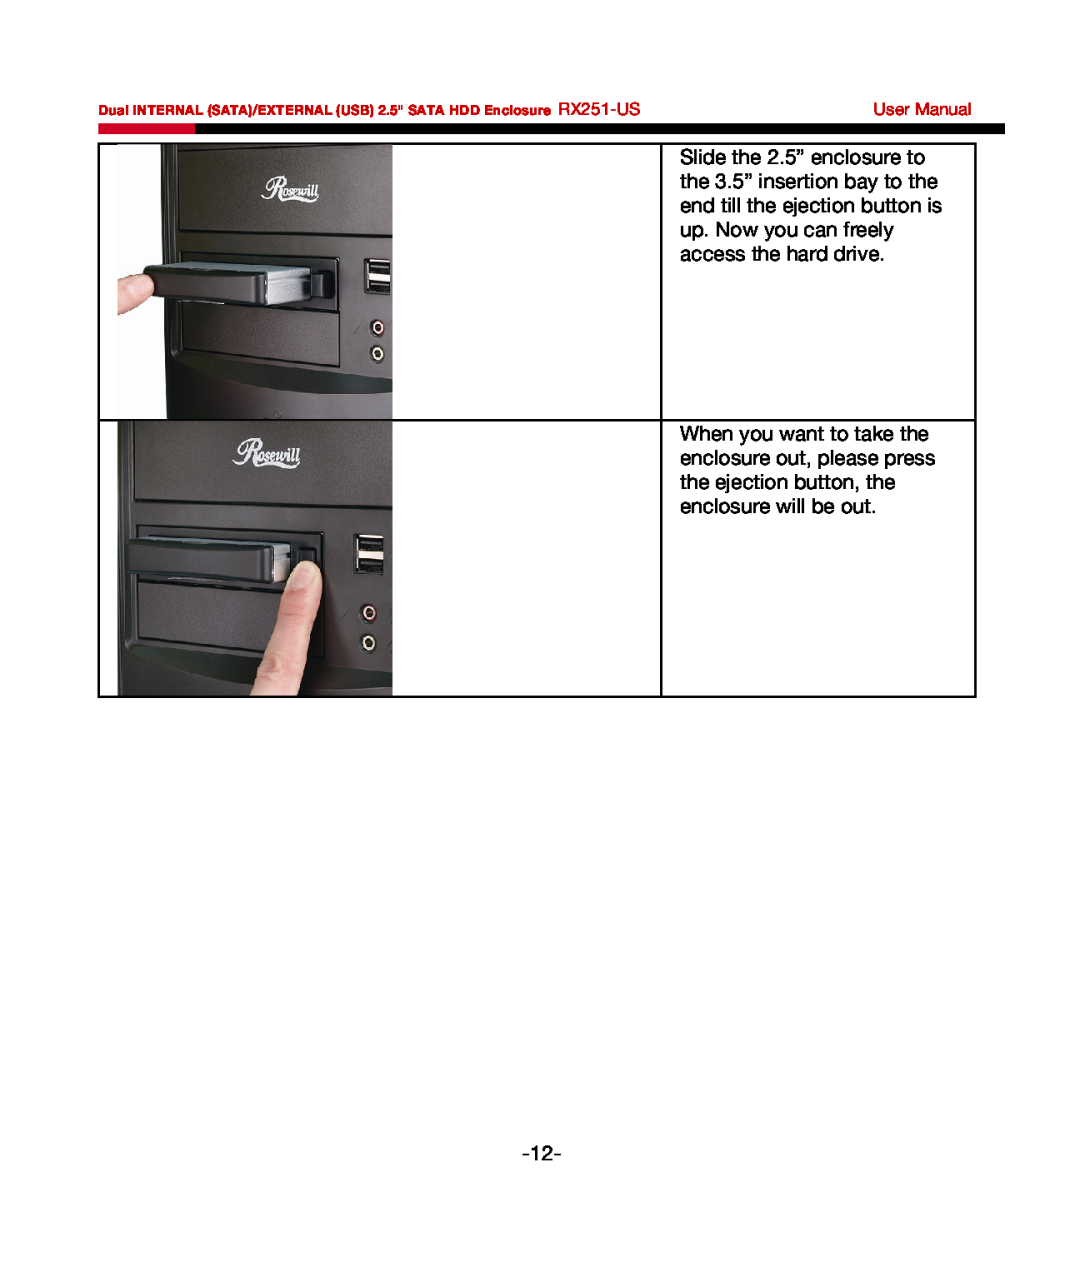 Rosewill user manual User Manual, Dual INTERNAL SATA/EXTERNAL USB 2.5 SATA HDD Enclosure RX251-US 